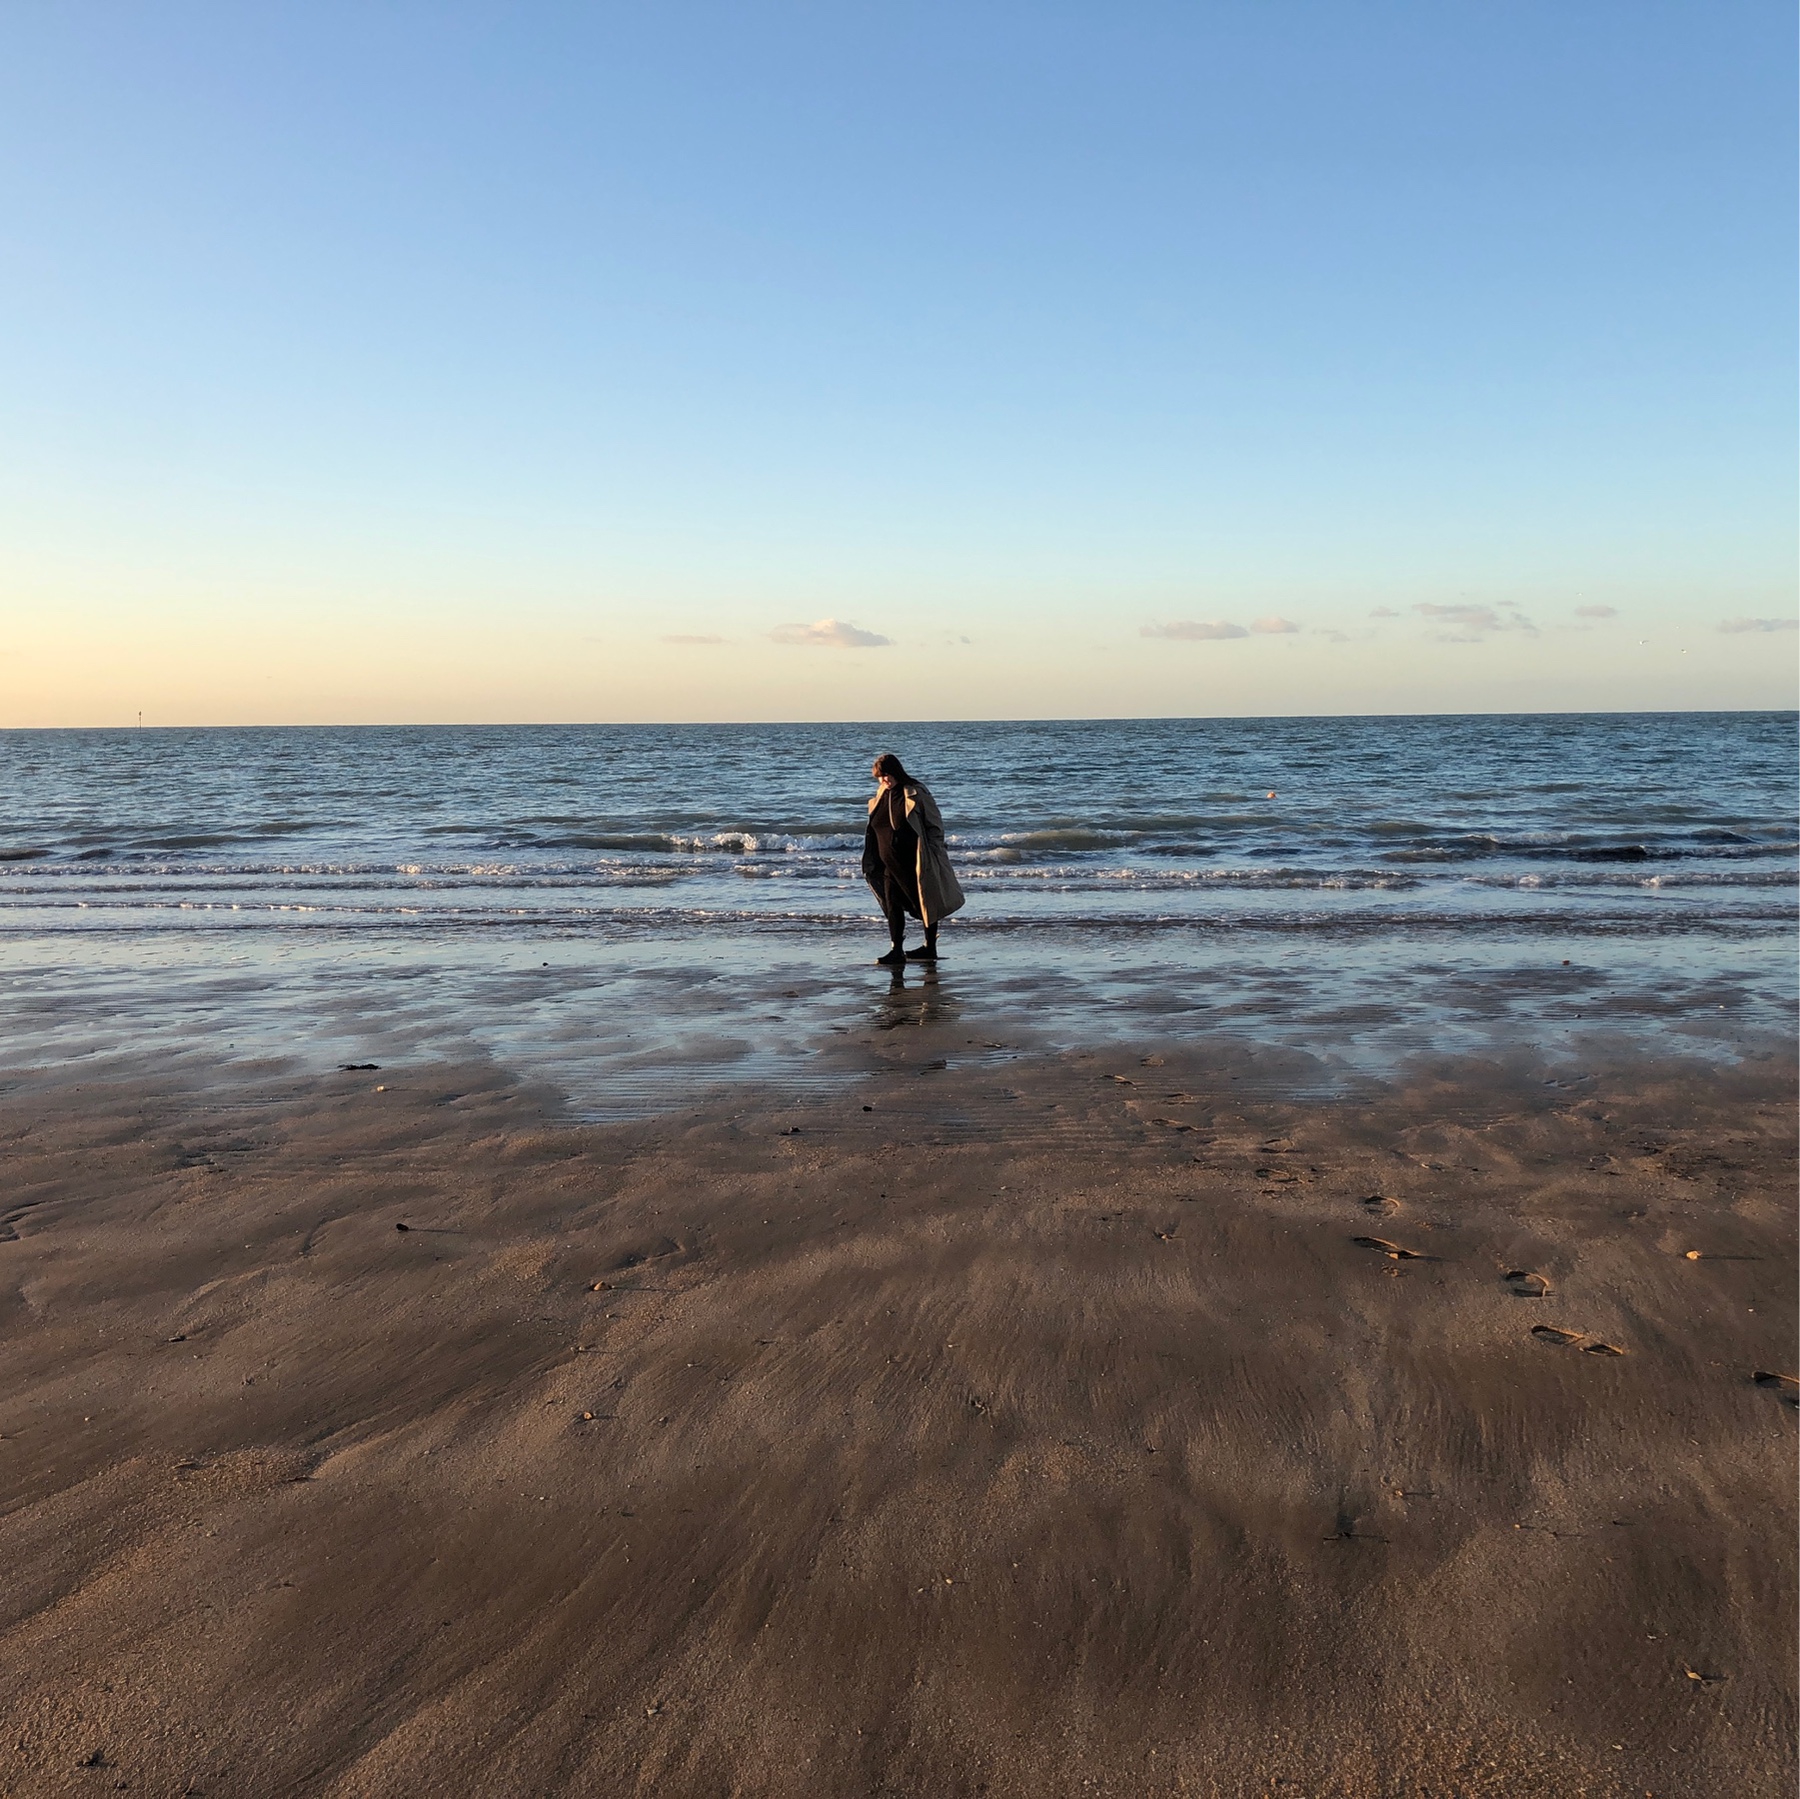 Anna walking on the sea, low tide blue skies